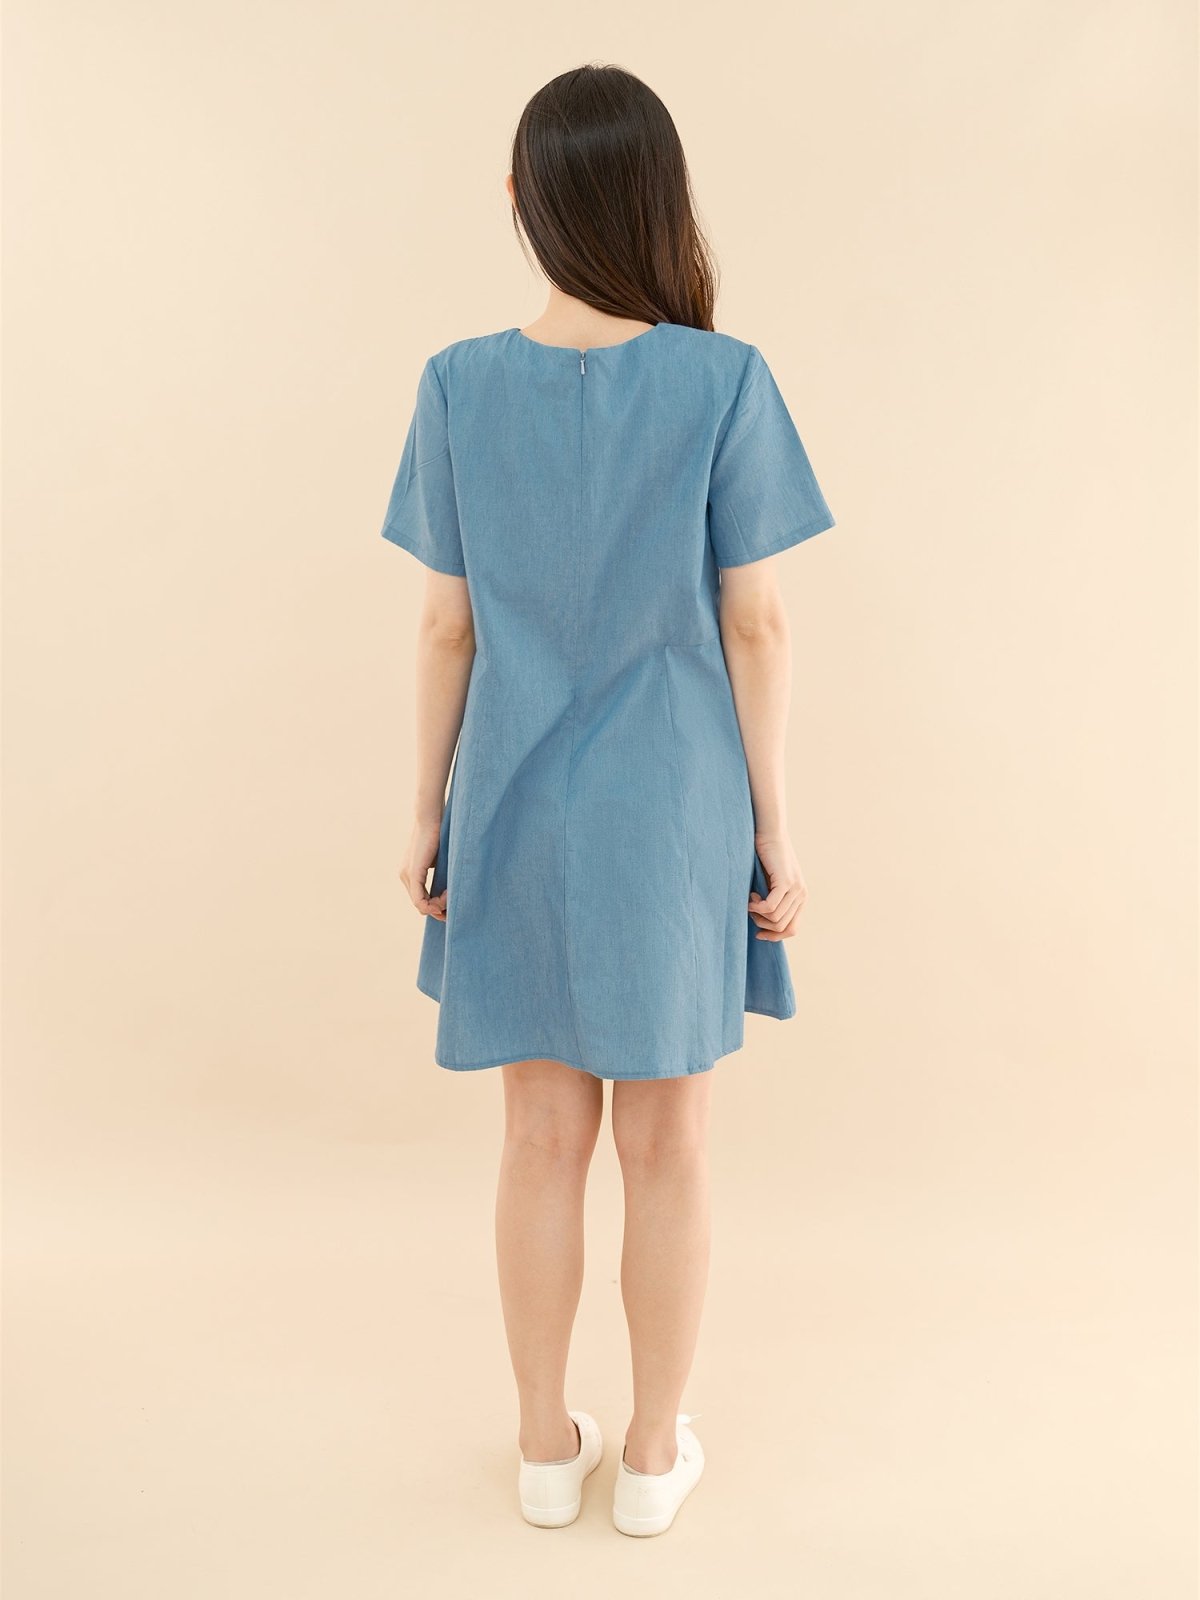 Penelope Panelled Mini Dress - DAG-DD9337-22LightDenimF - Baby Blue - F - D'ZAGE Designs